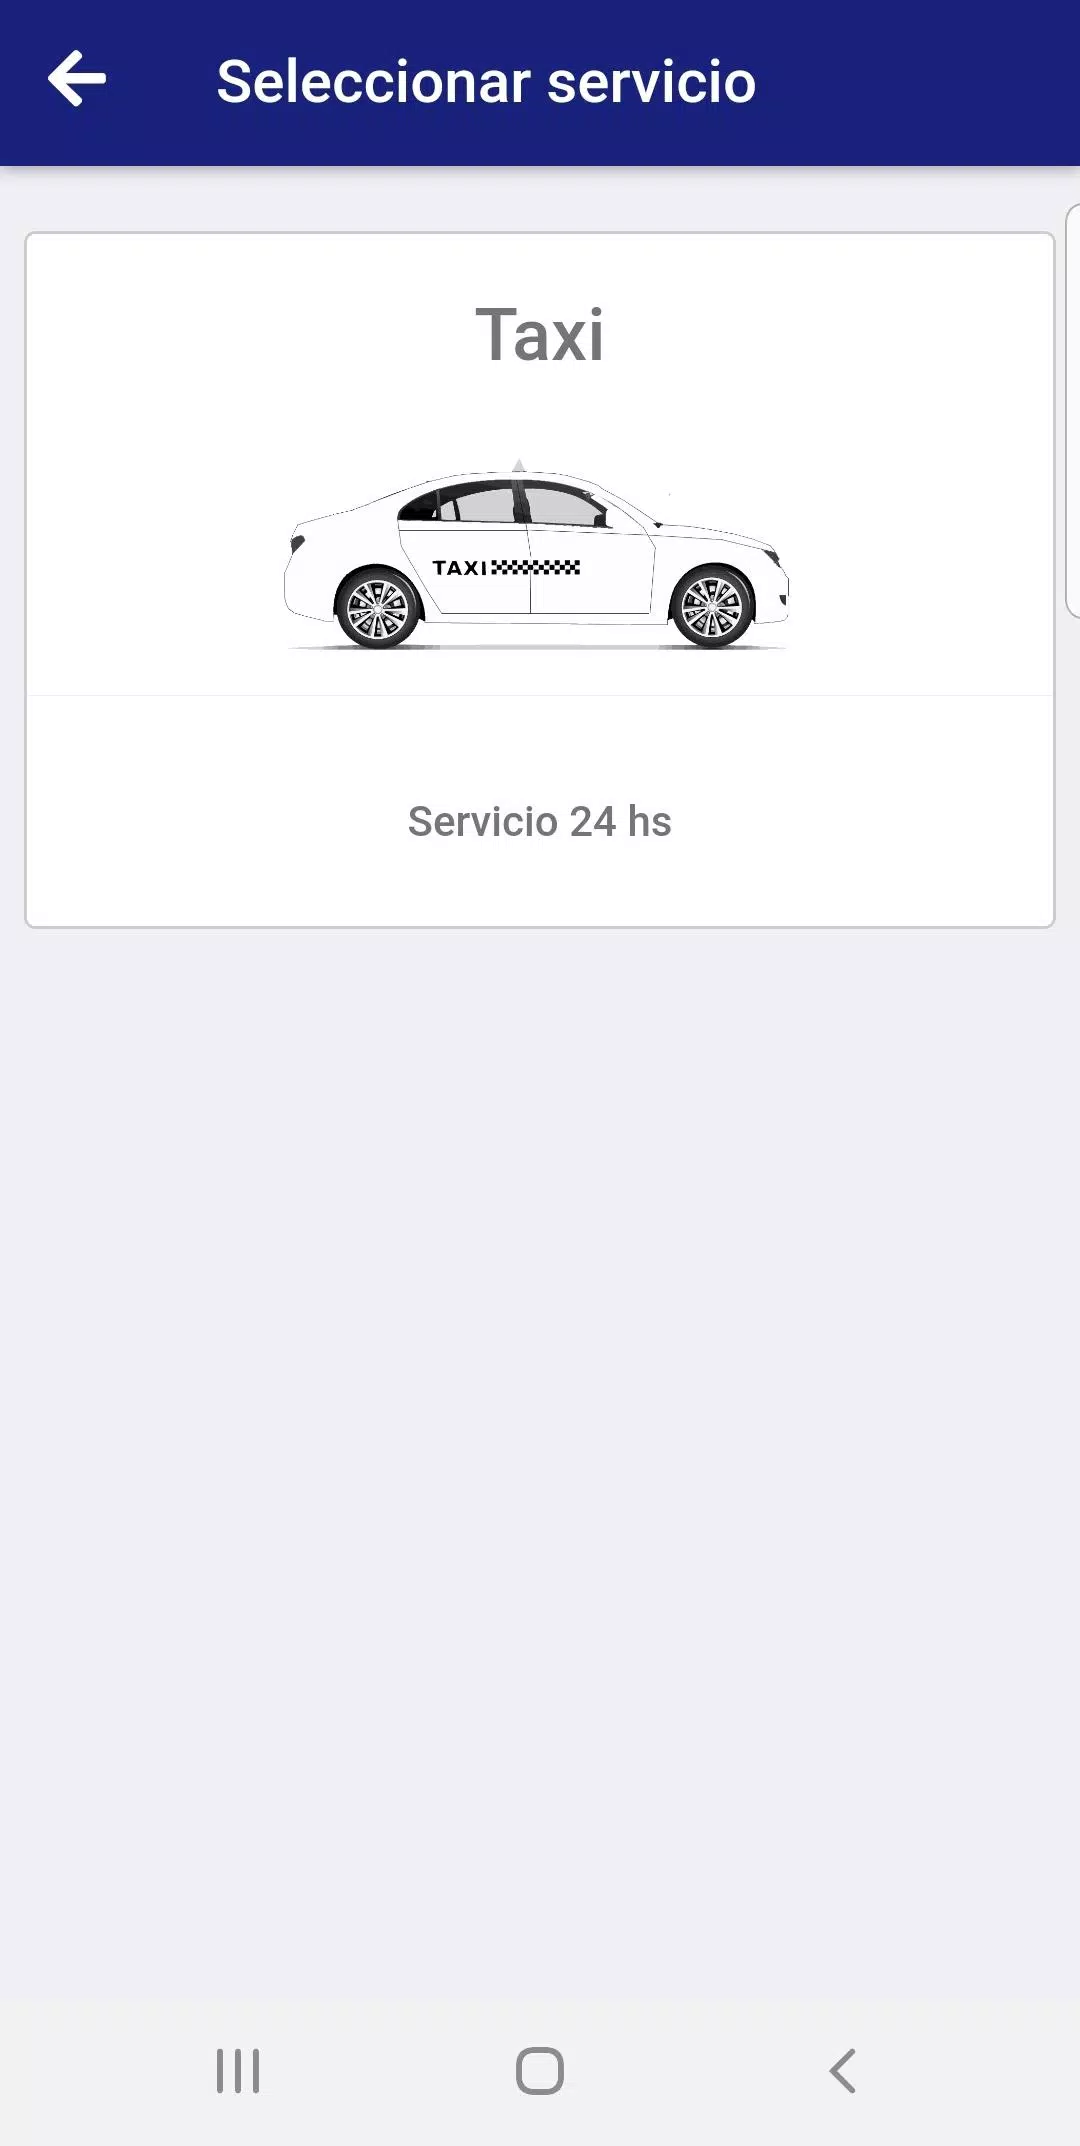 Radio Taxi La Rioja - Clientes APK for Android Download